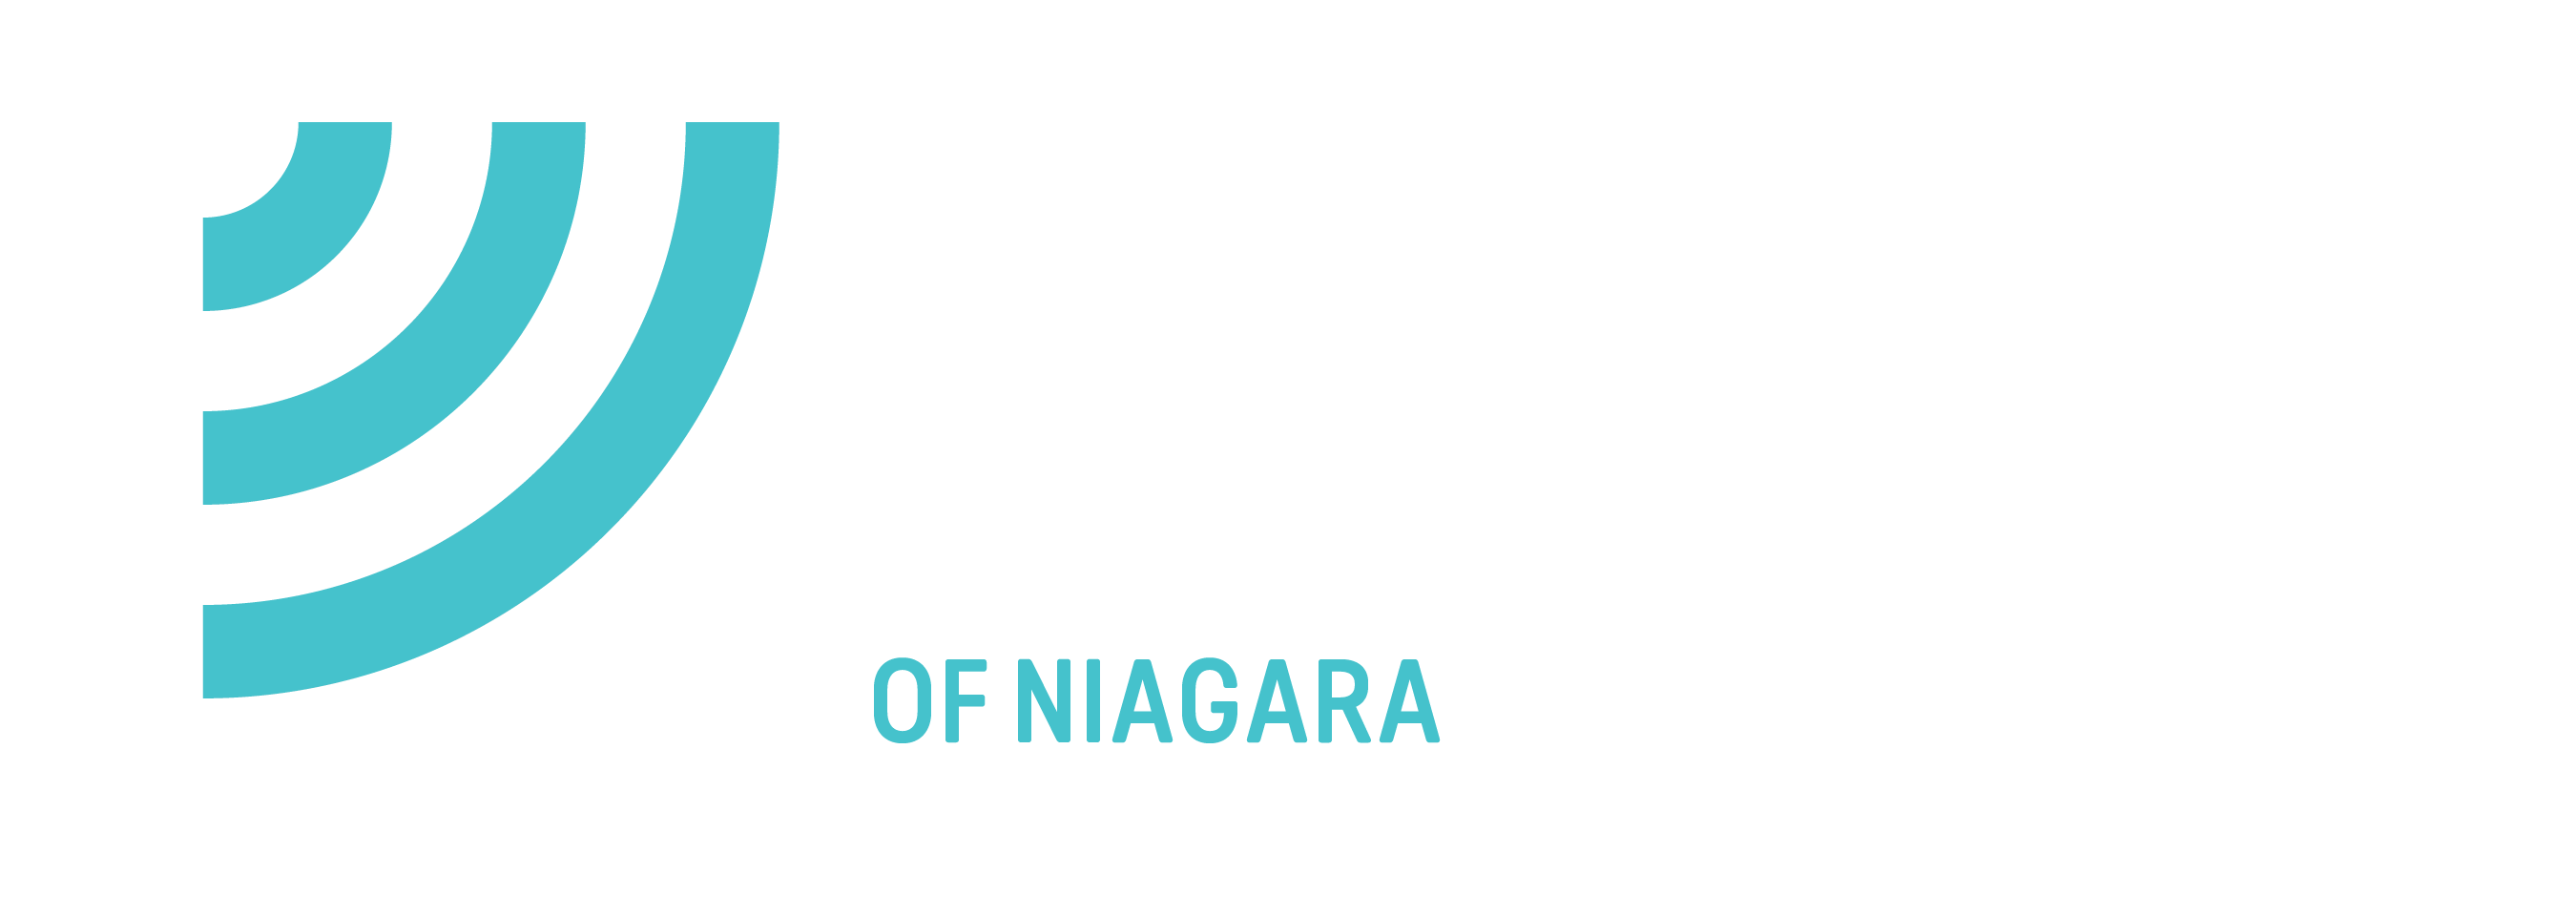 ROBBIE AND TIM - Big Brothers Big Sisters of Niagara